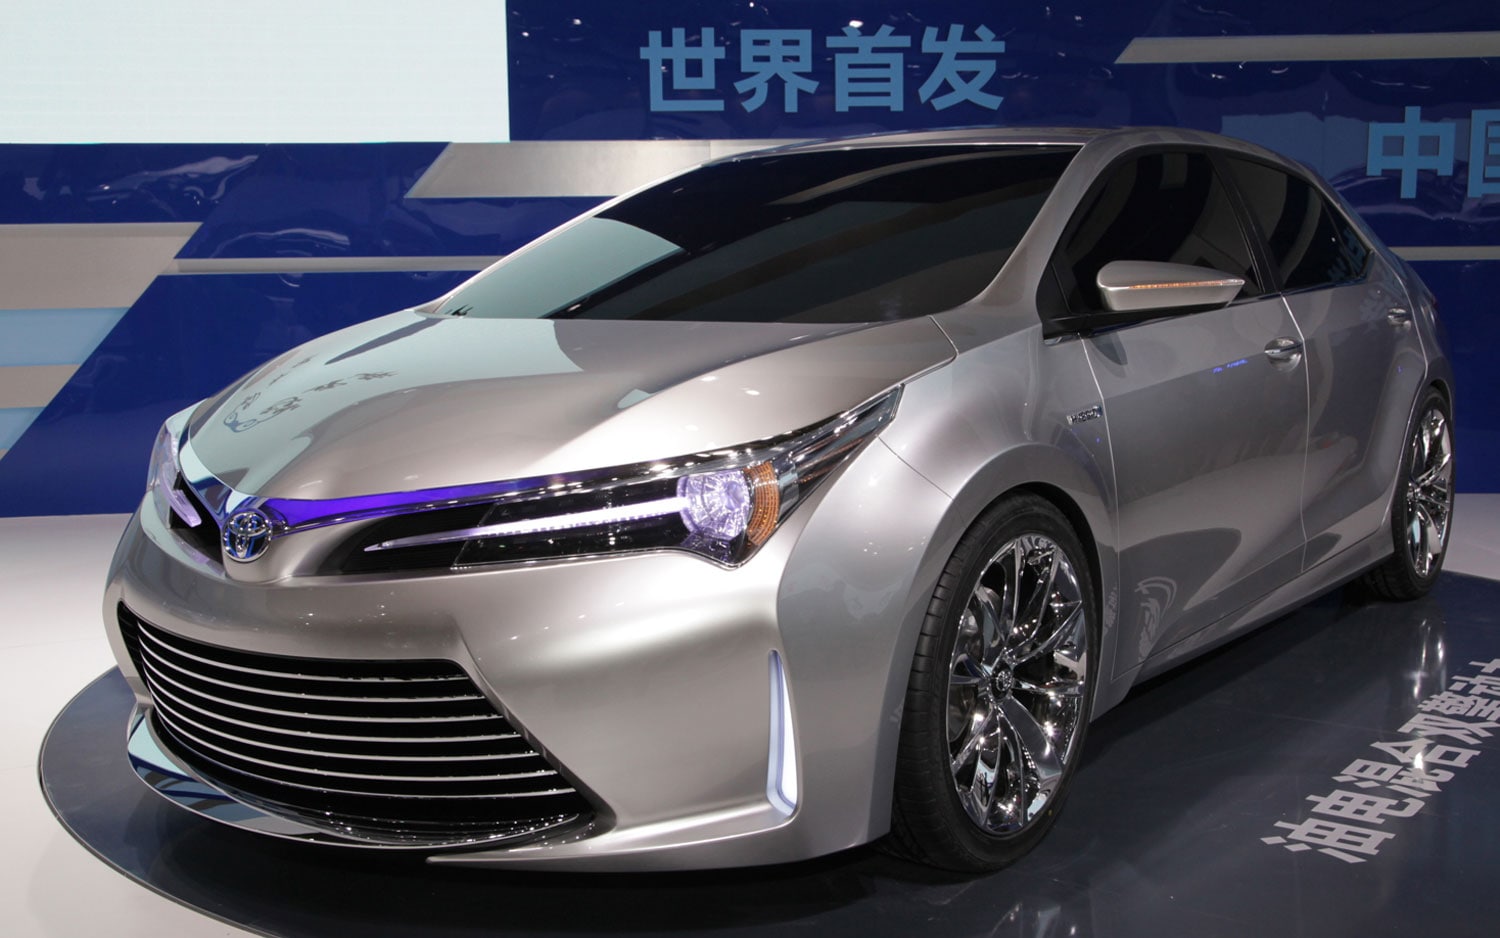 2015 Toyota Corolla Hybrid: Should They Make It?